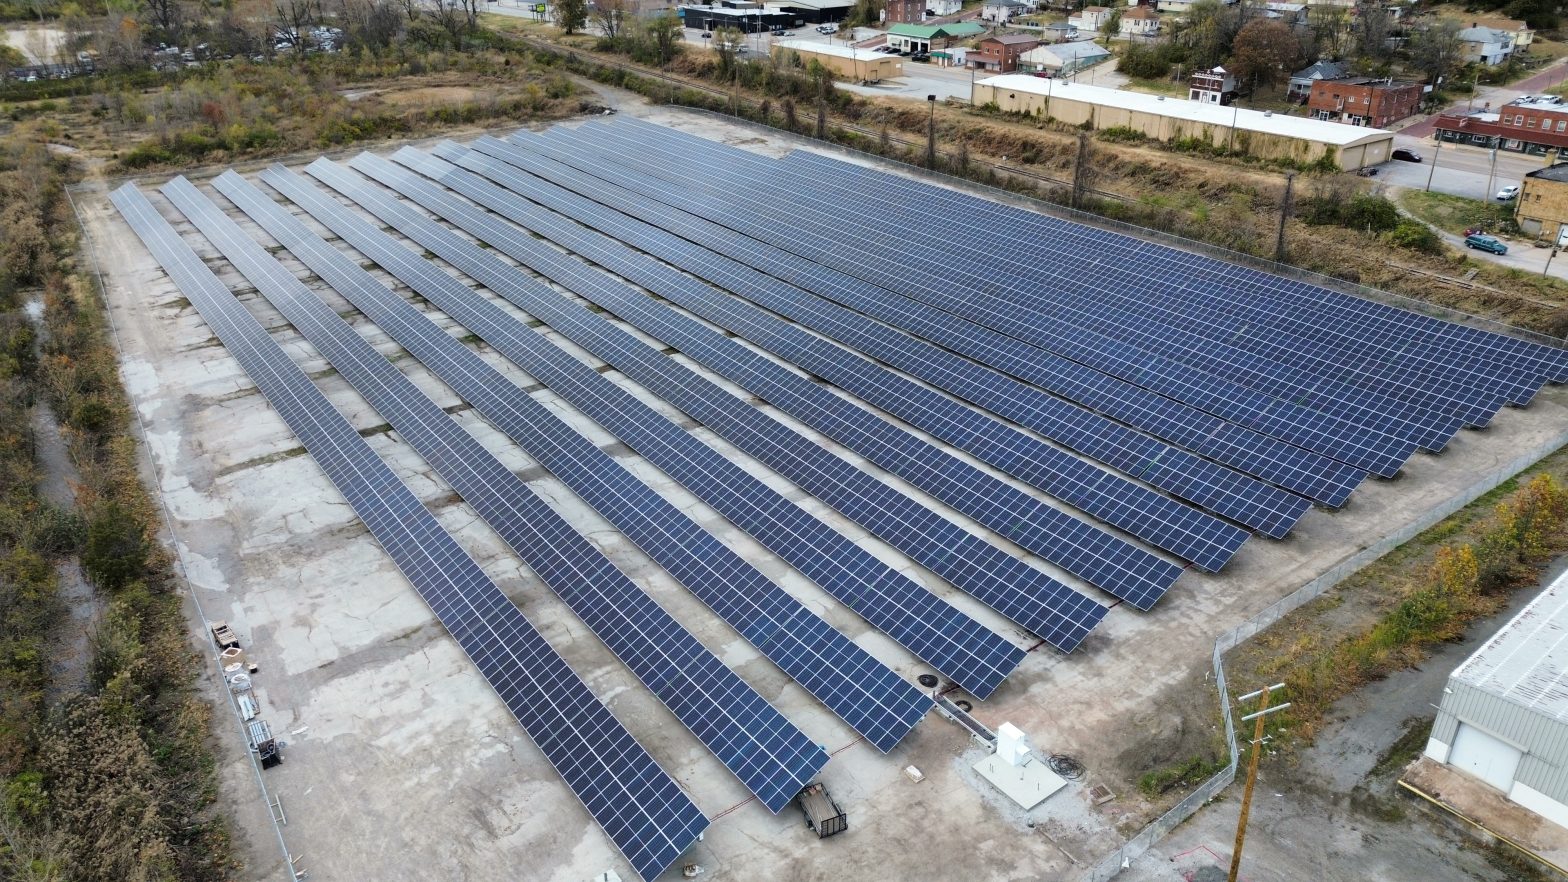 Solar arrays helping power Alton Steel